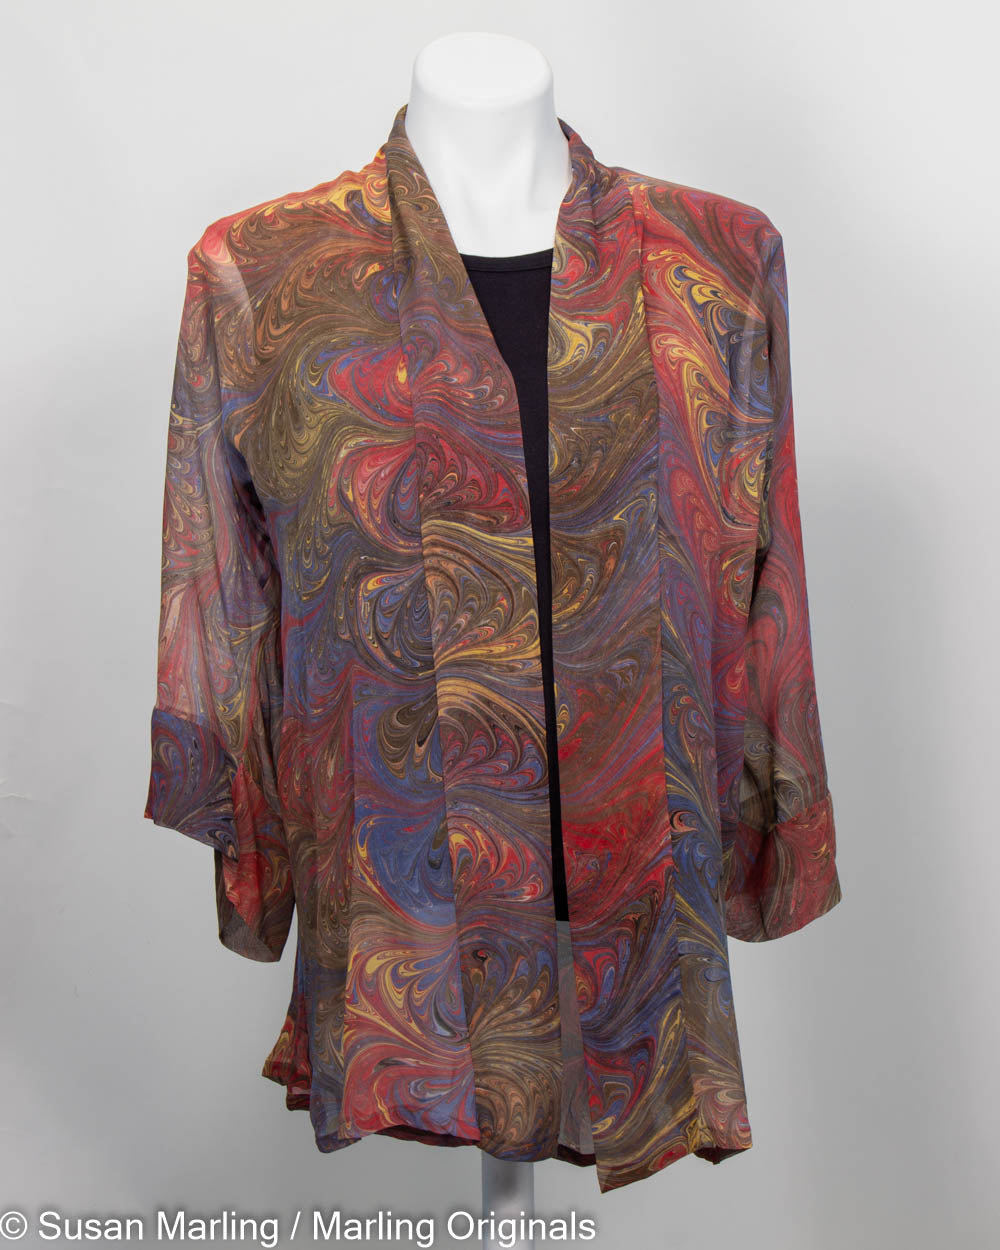 sheer silk kimono jacket in warm earth tones in a feathery marbled pattern 